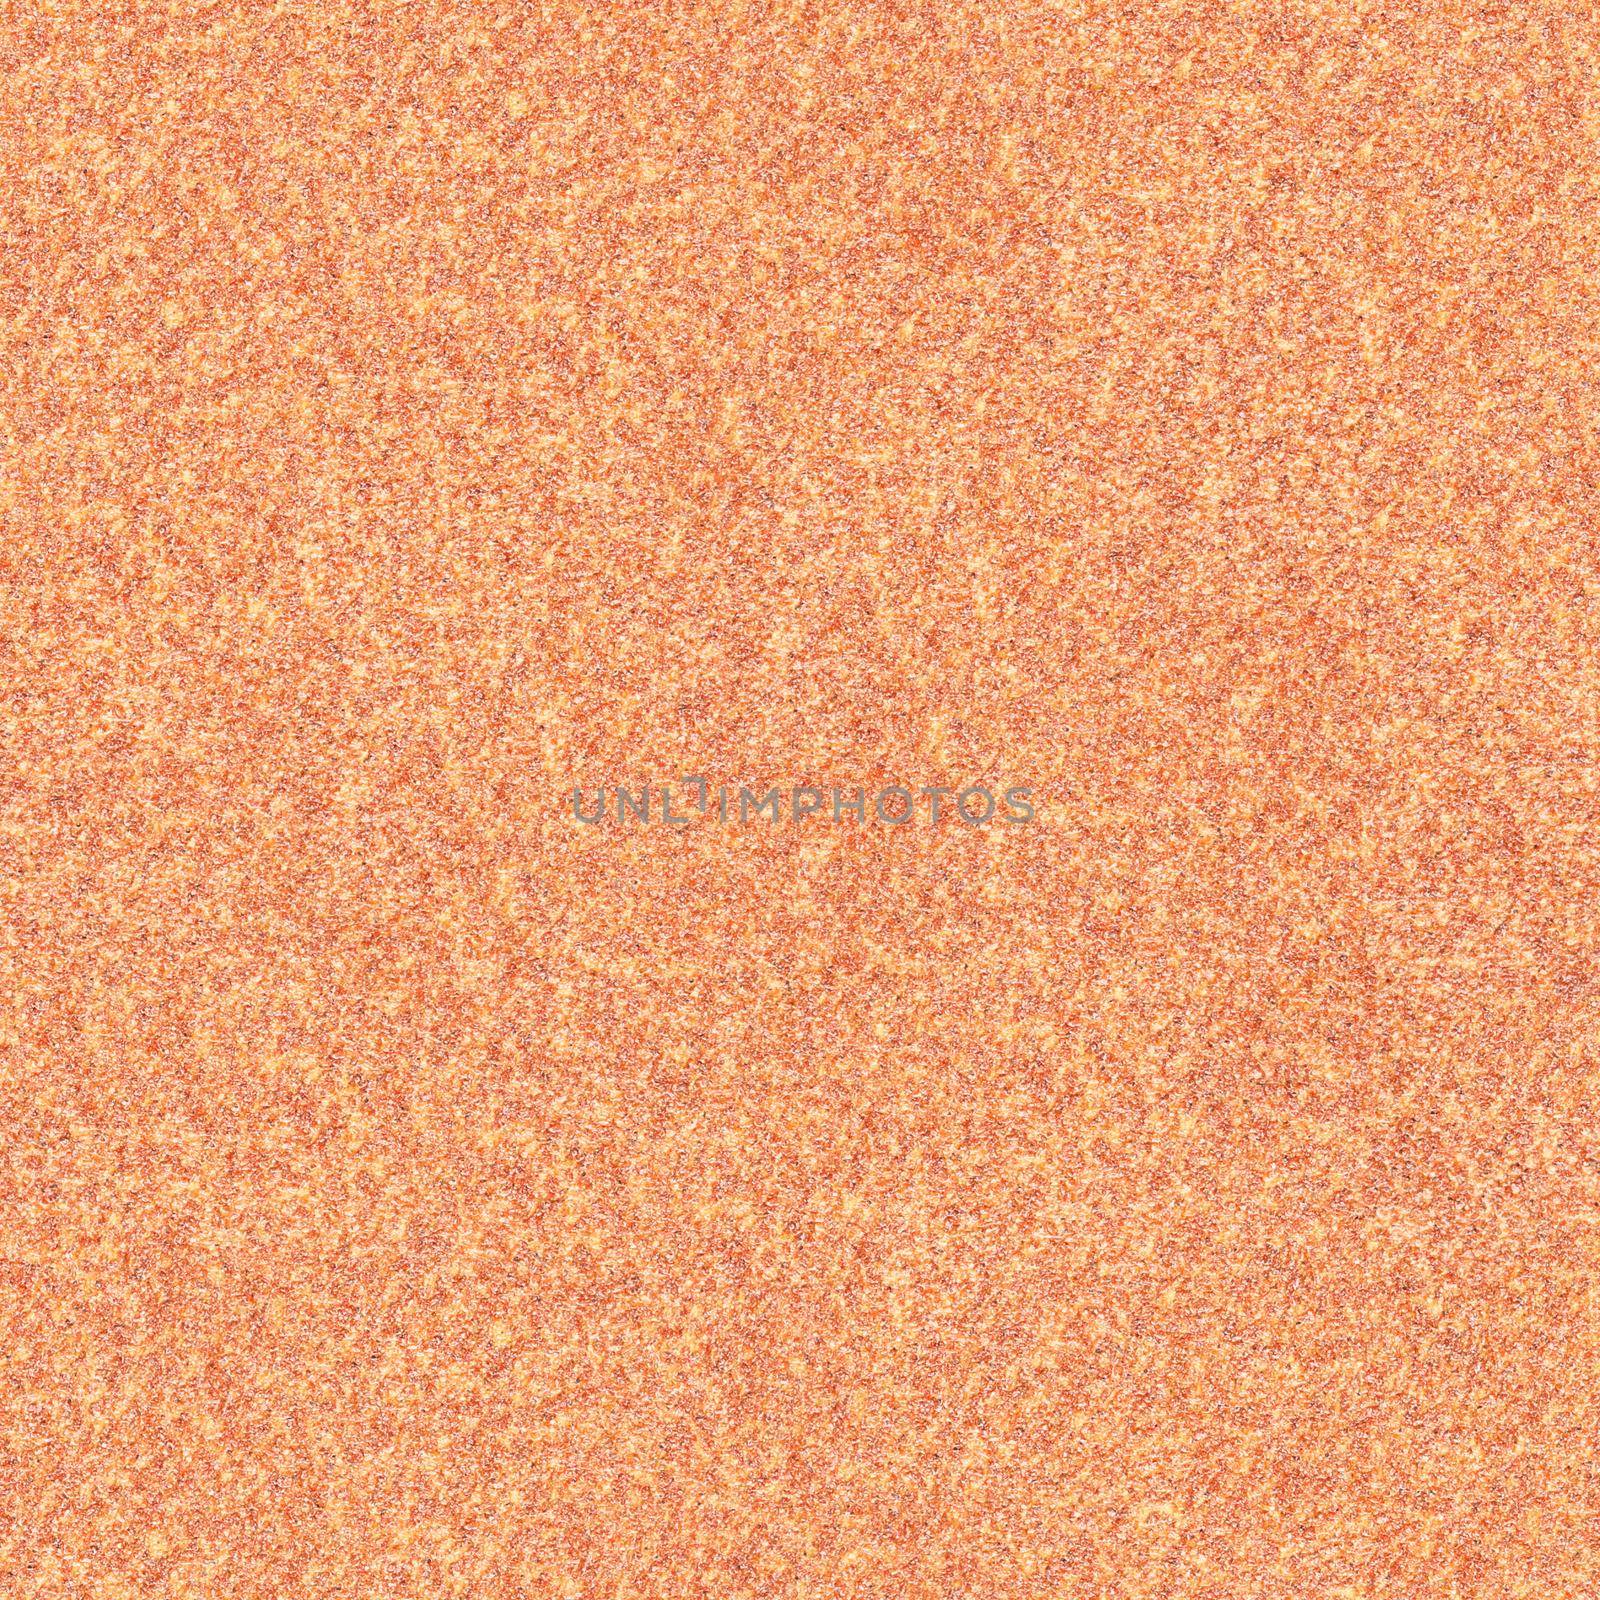 sandpaper texture by norgal